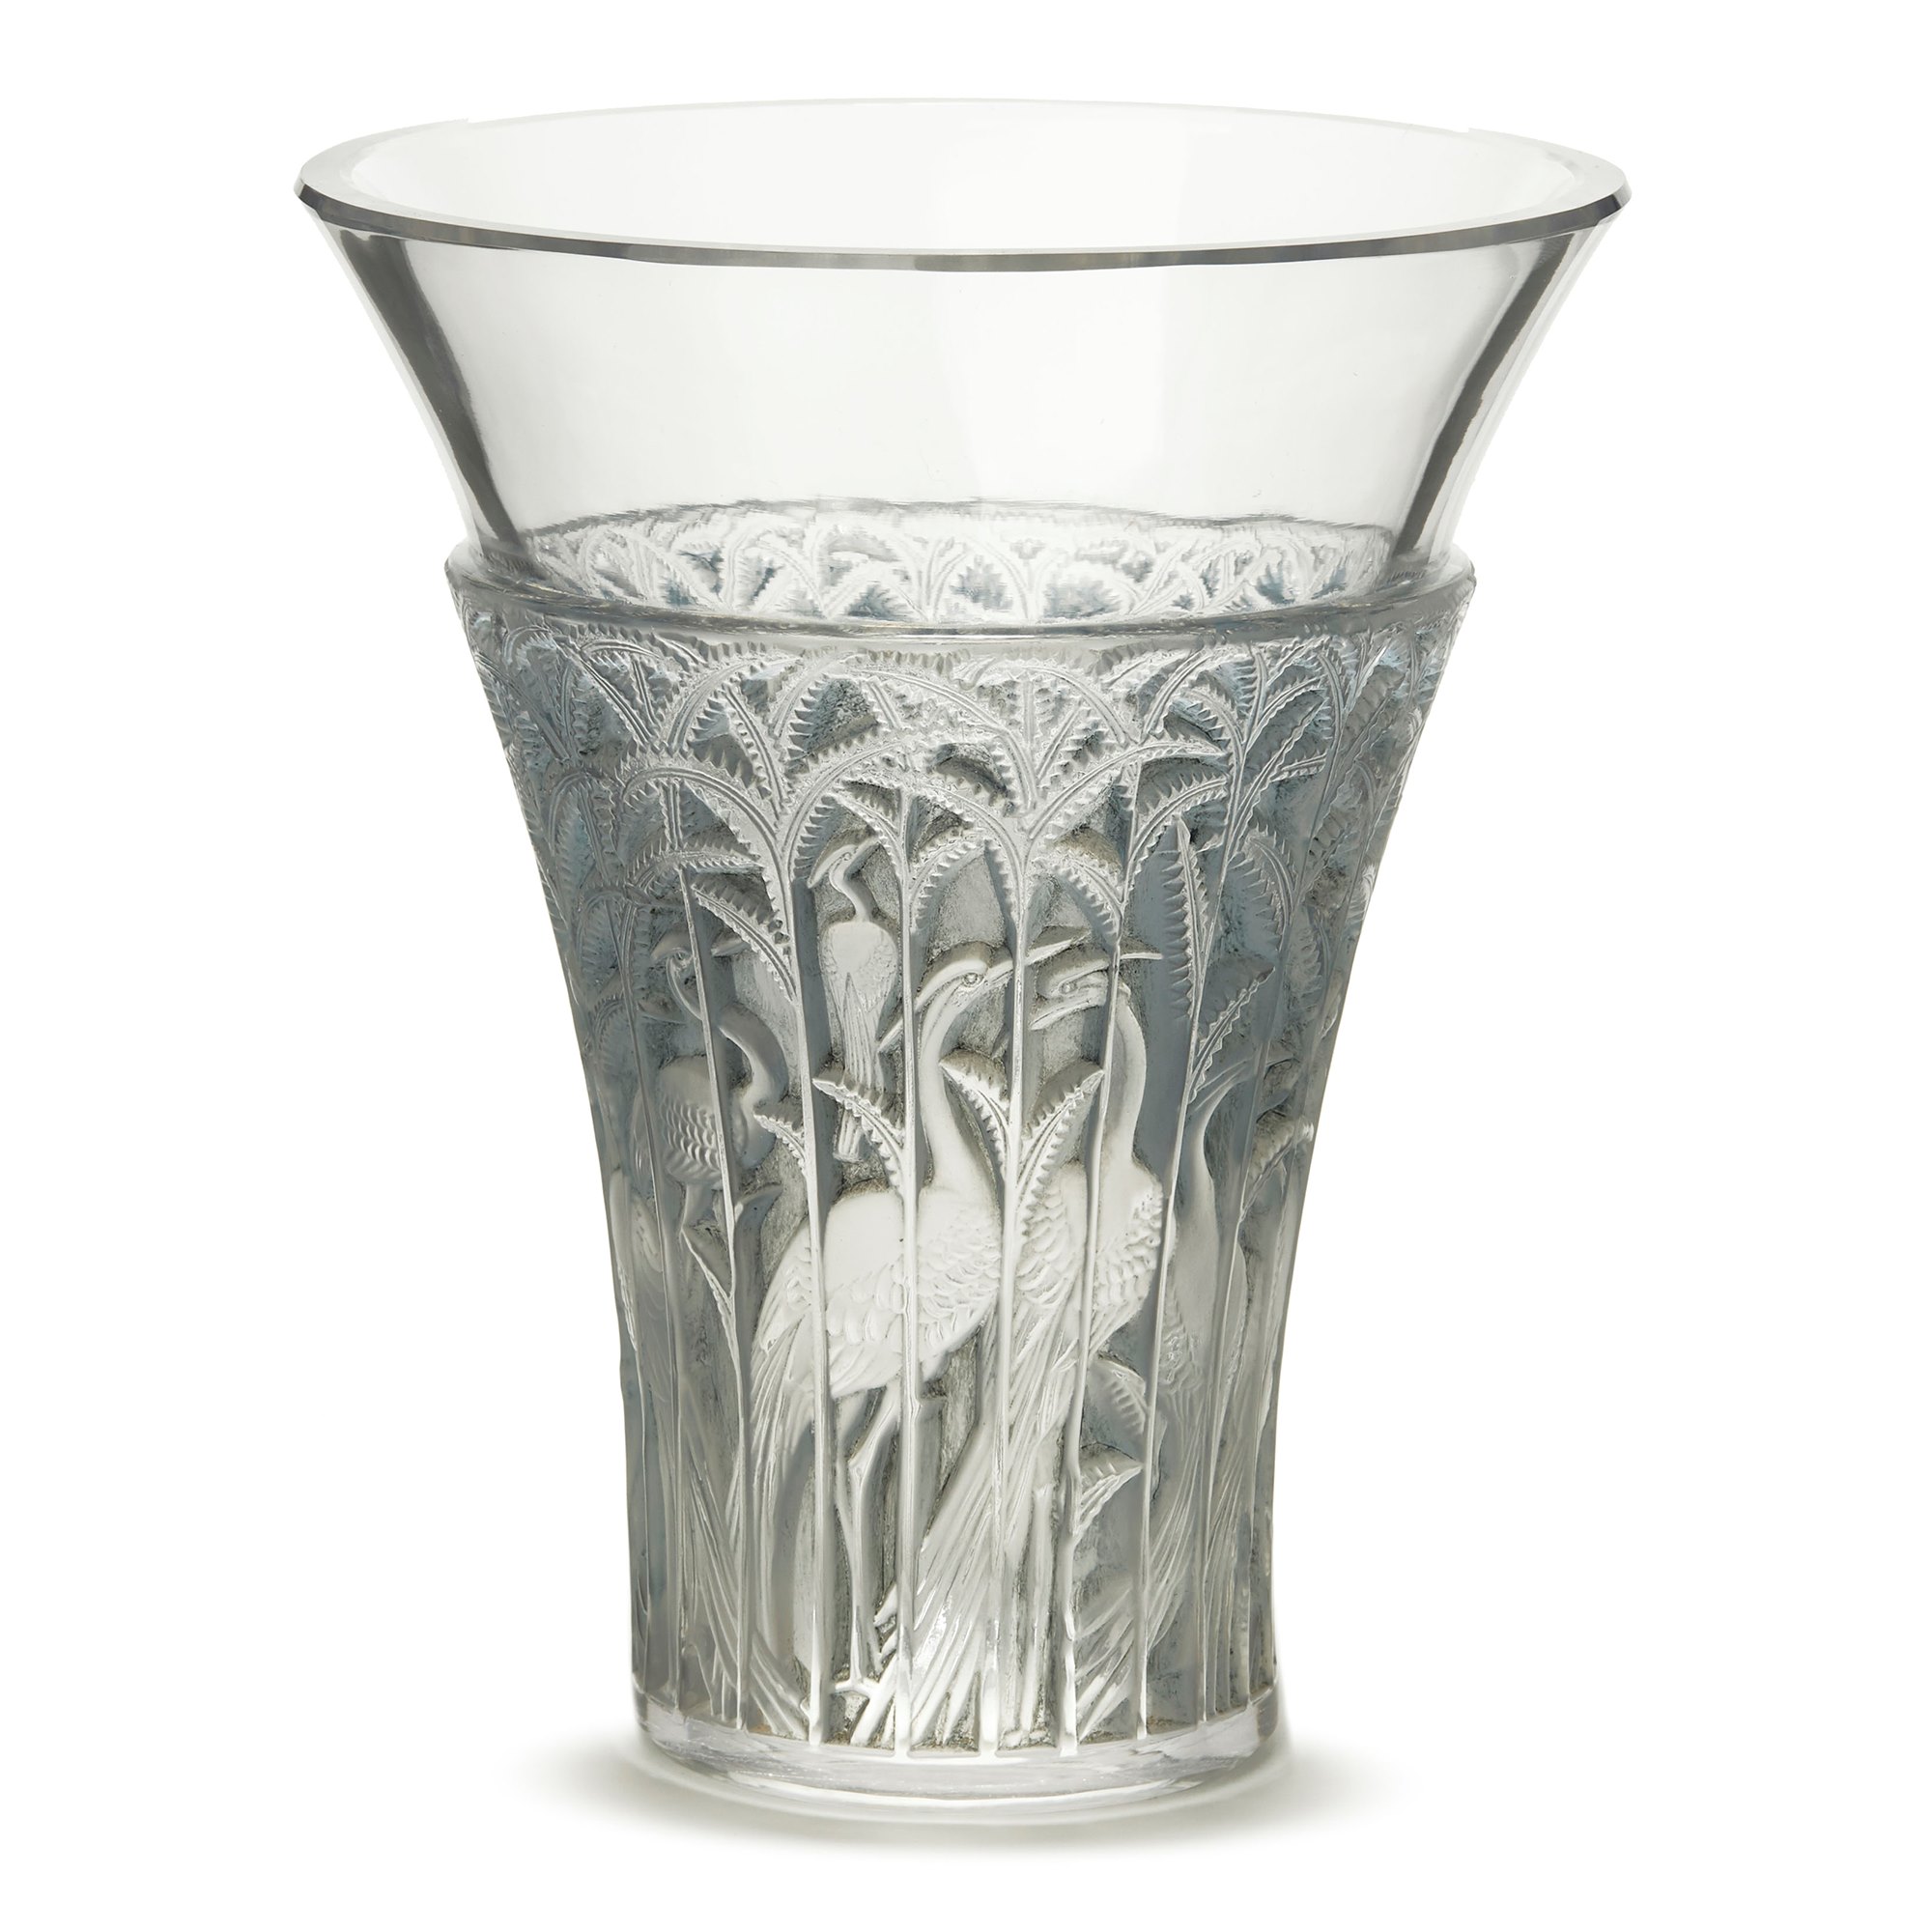 RENE LALIQUE IBIS BLUE TINTED GLASS VASE DESIGNED 1934 Designed 1934